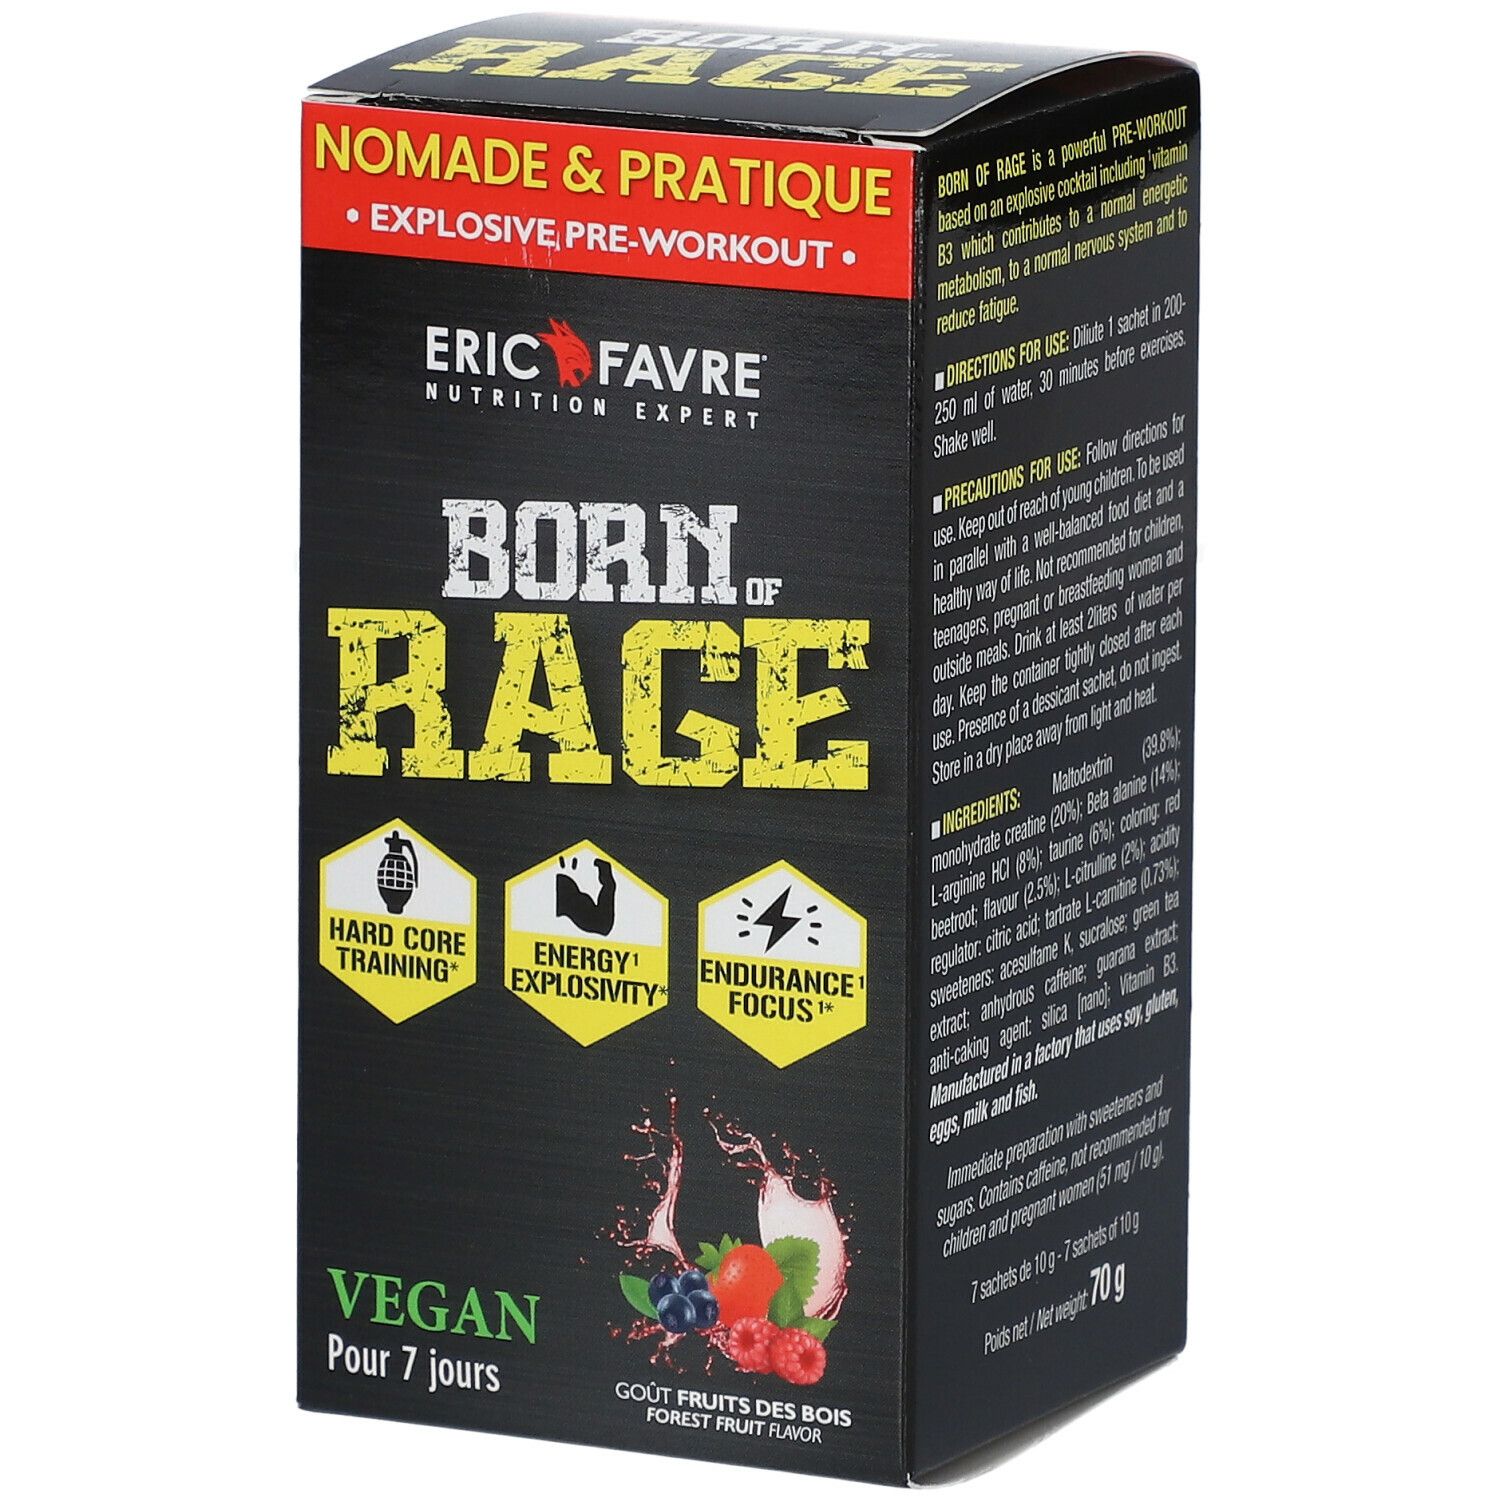 Eric Favre® Travel Box - Born of rage - Explosive Vegan Préworkout